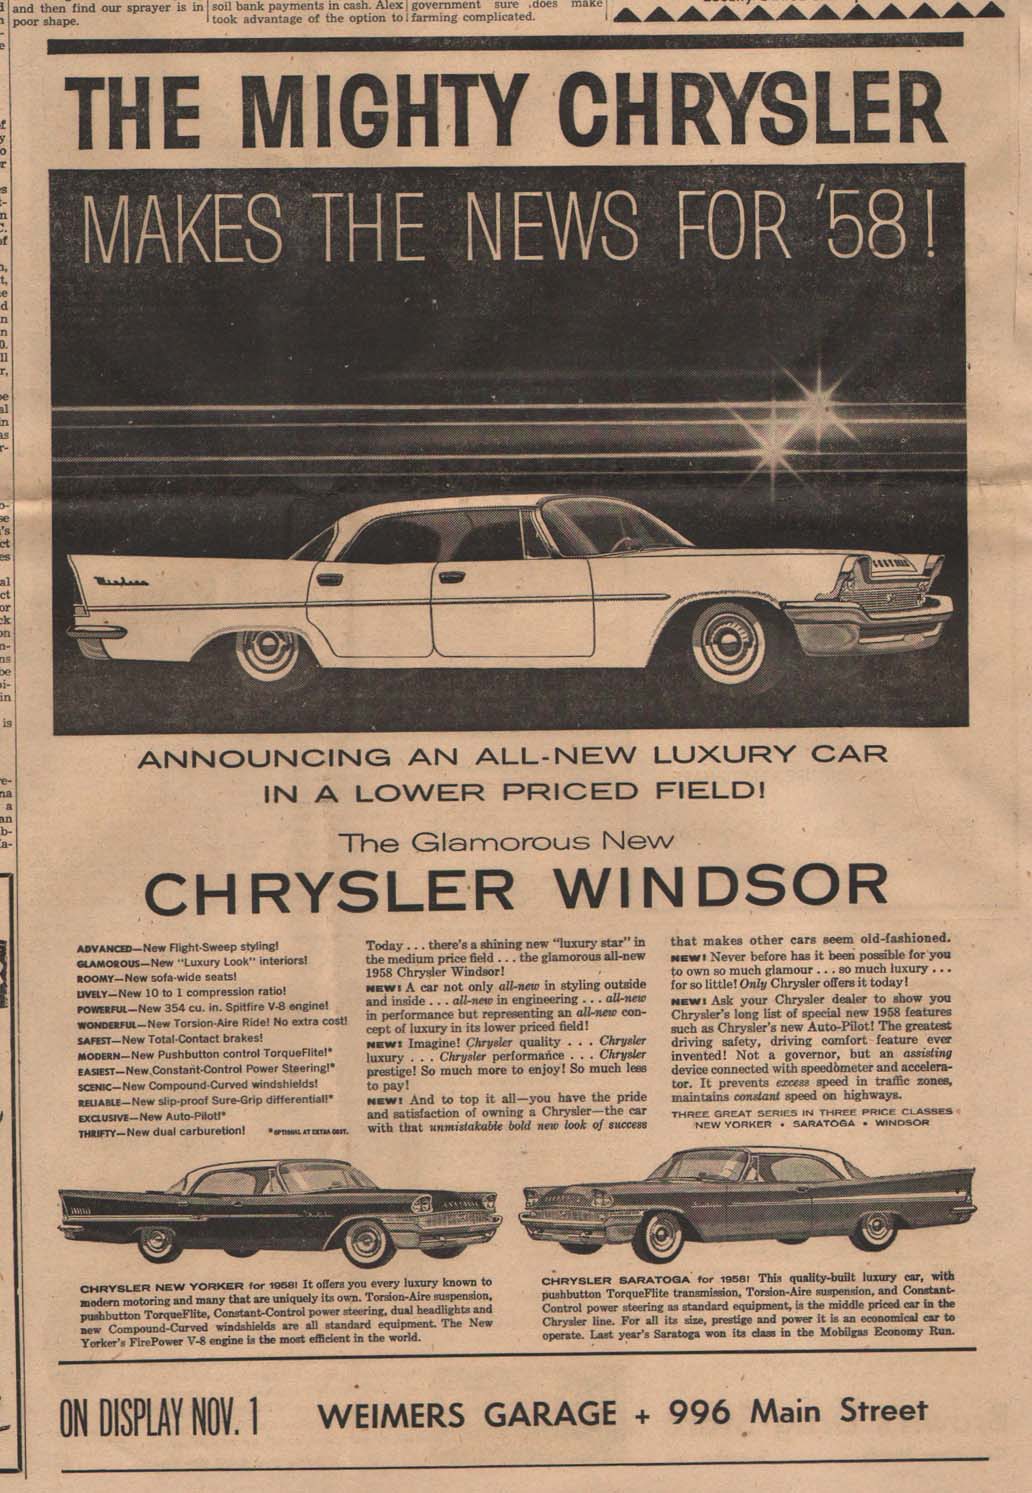 advert for Weimer's Garage for the 1957 line of Dodge trucks